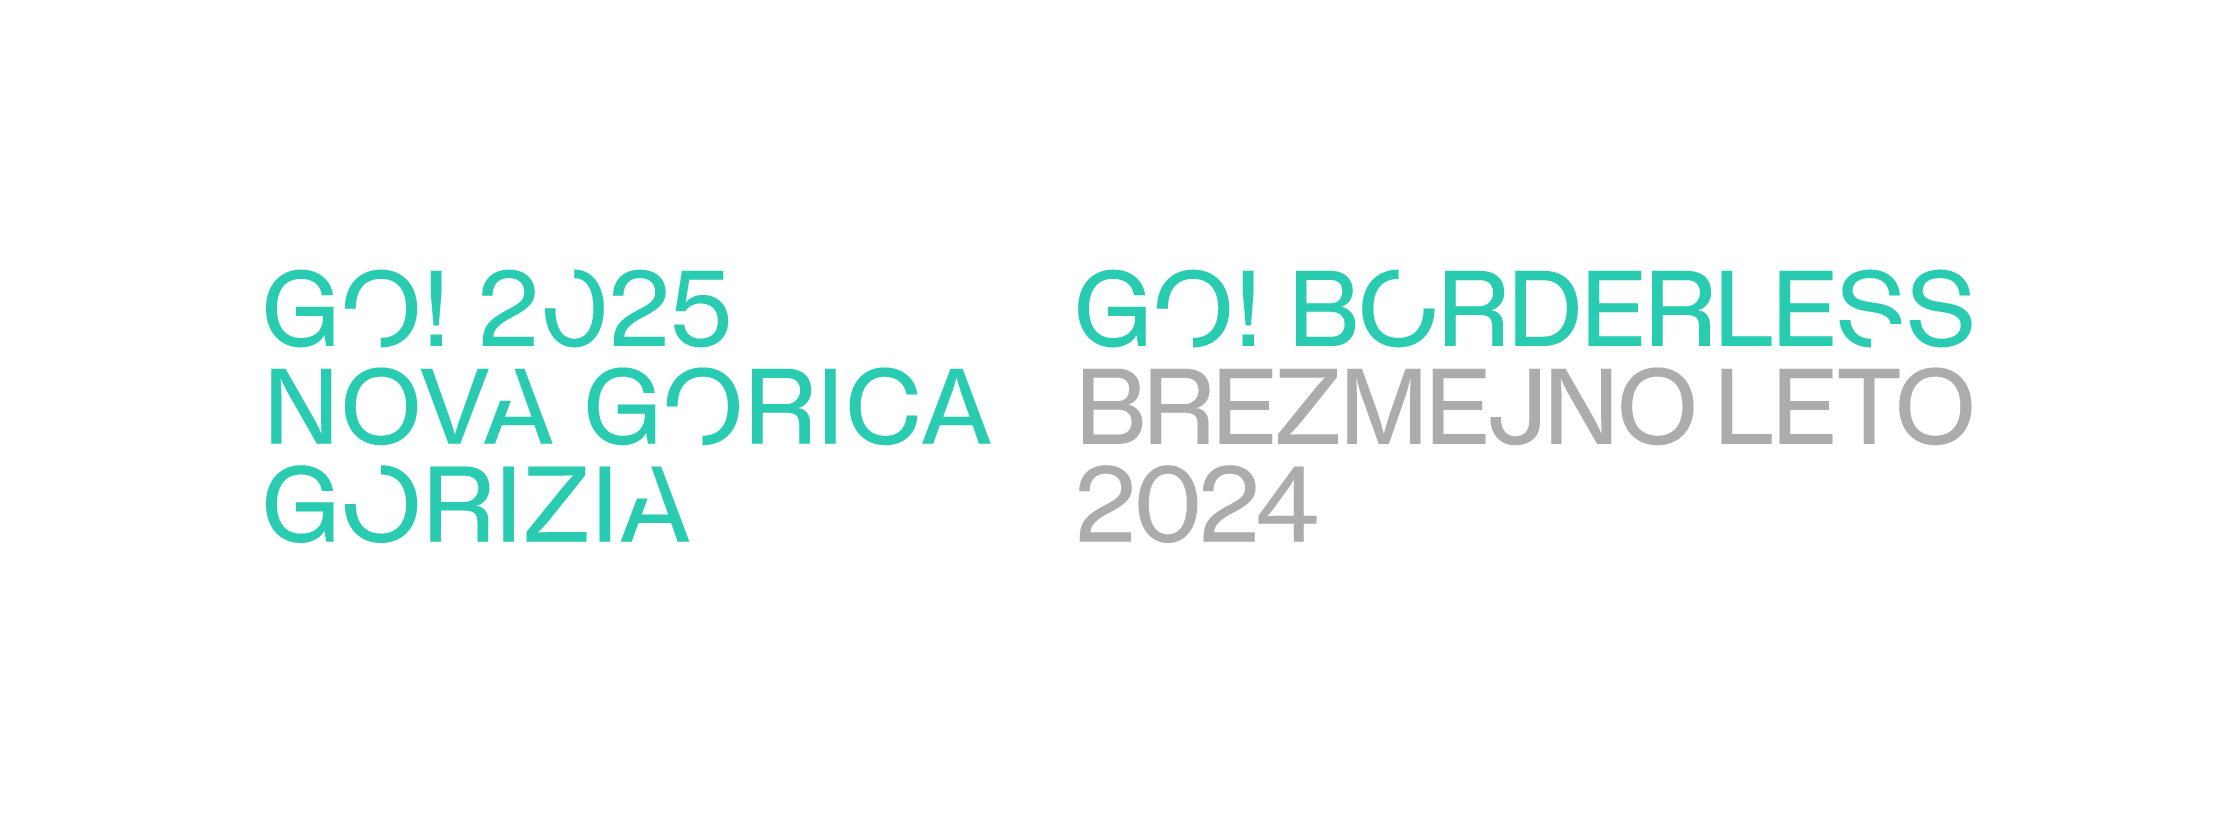 GO! 2025 Nova Gorica